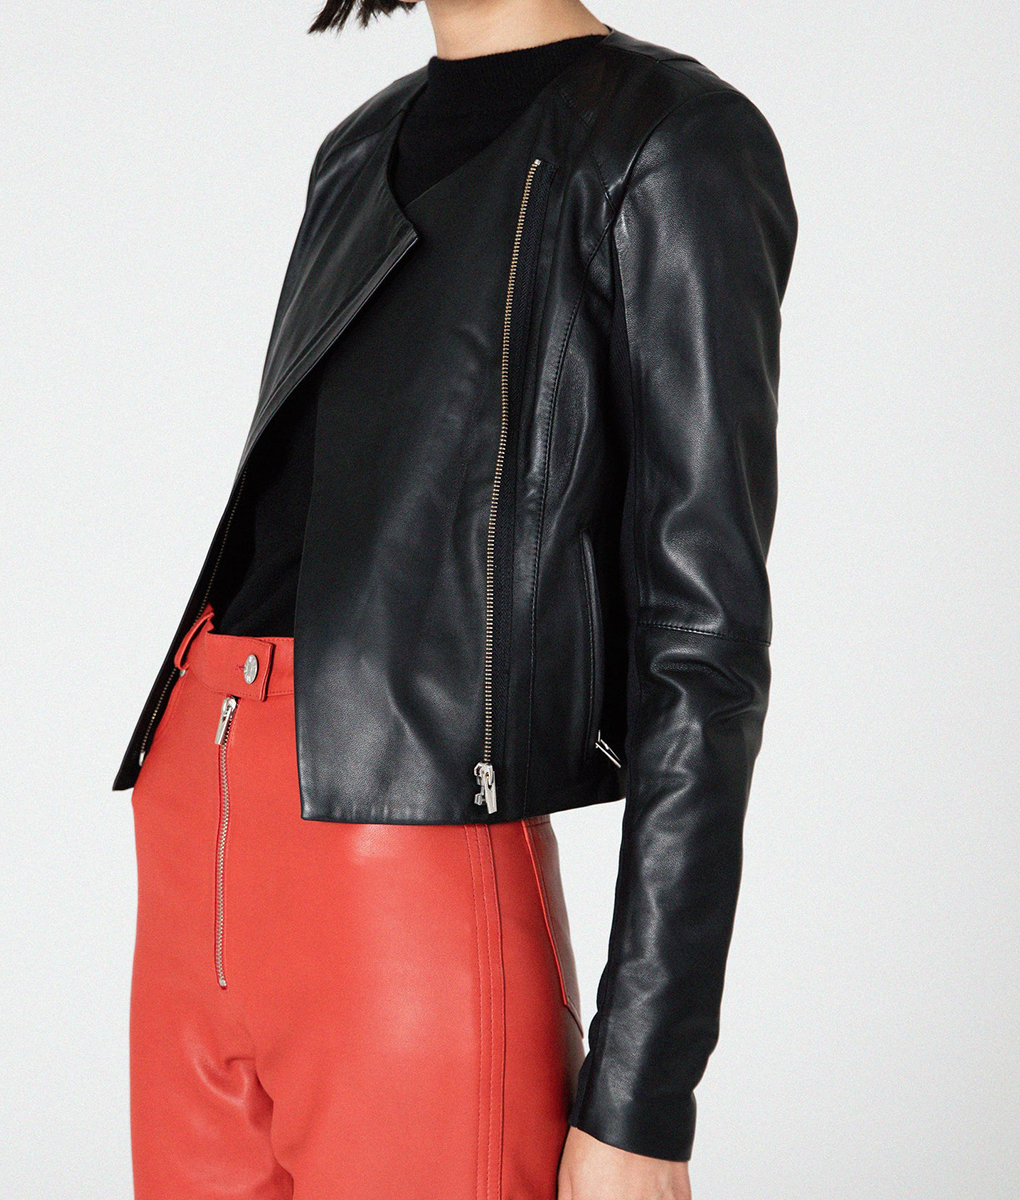 Pamela Adlon Better Things Black Leather Jacket (4)